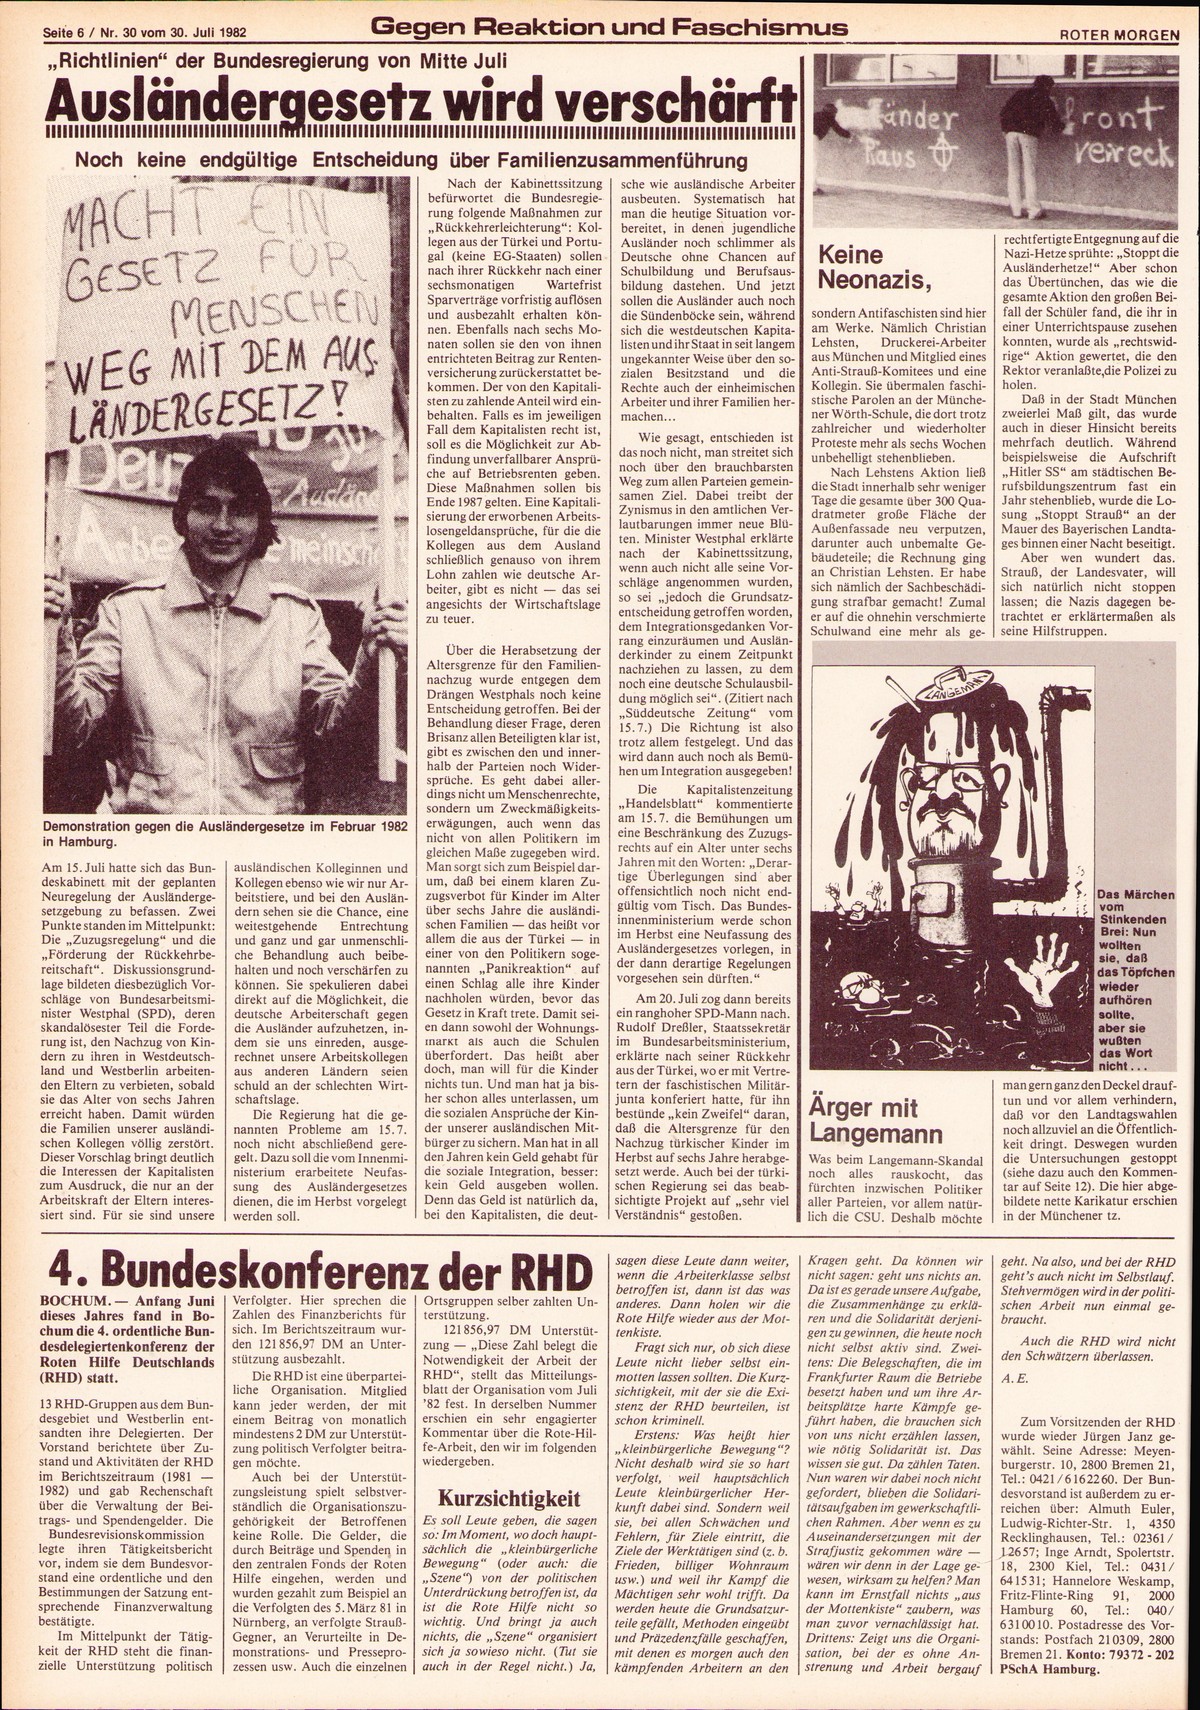 Roter Morgen, 16. Jg., 30. Juli 1982, Nr. 30, Seite 6